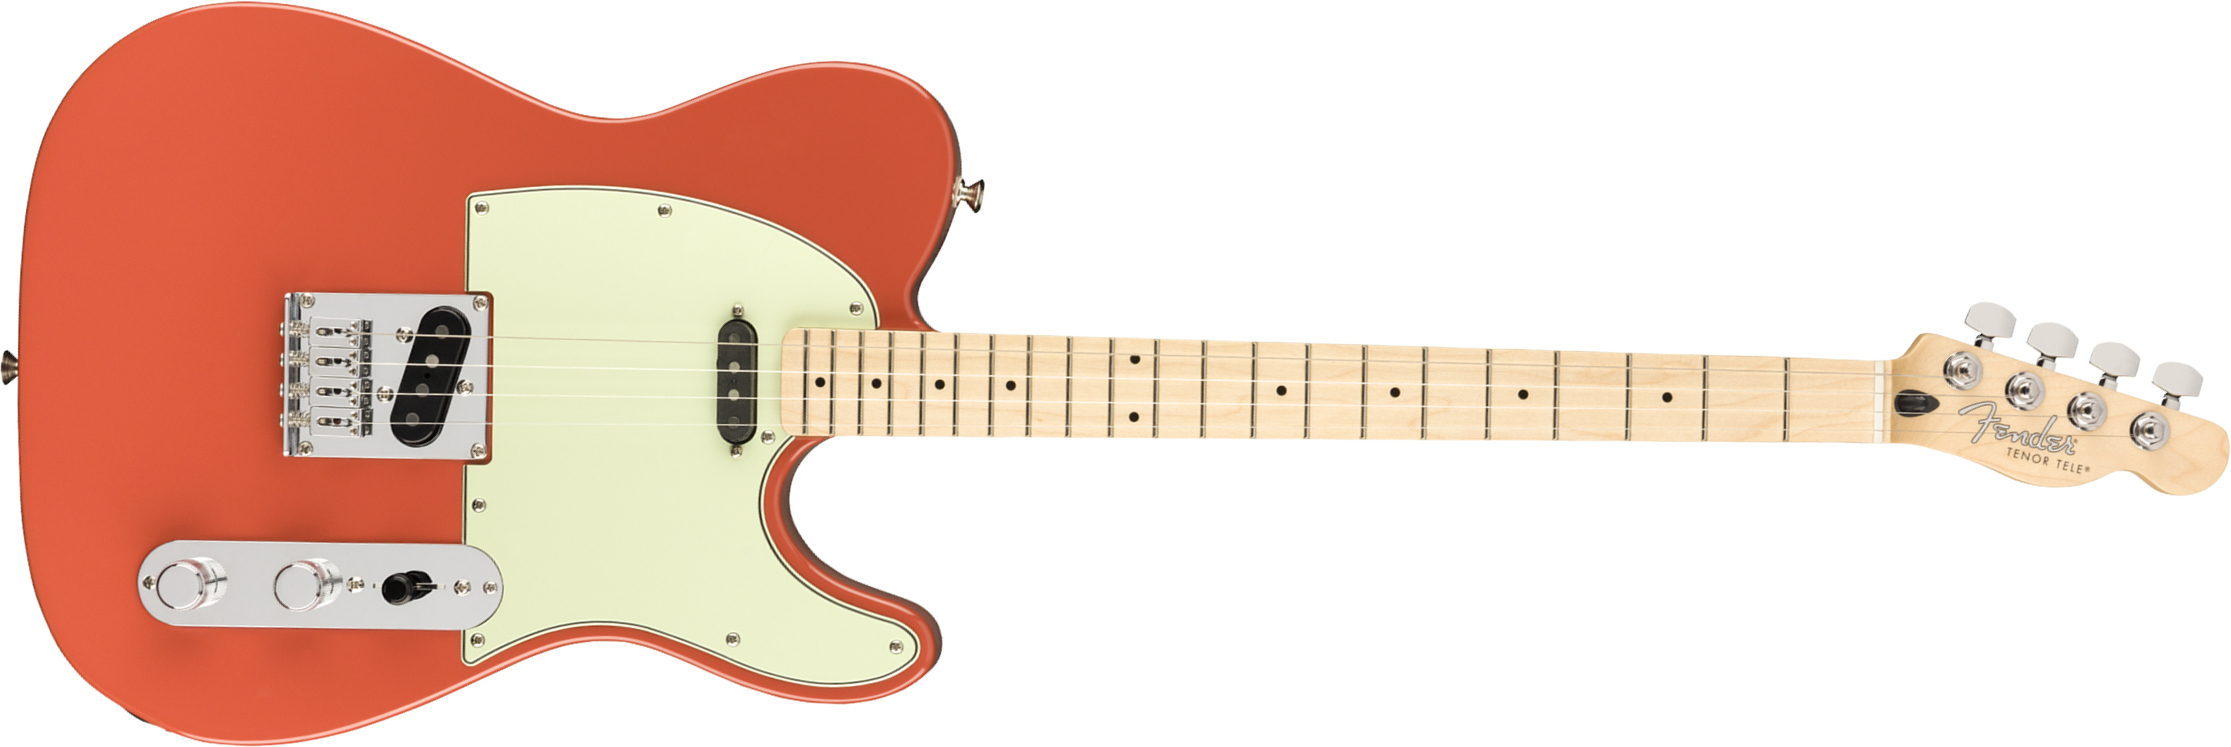 Fender Tenor Tele Alternate Reality Mex Mn - Fiesta Red - Televorm elektrische gitaar - Main picture